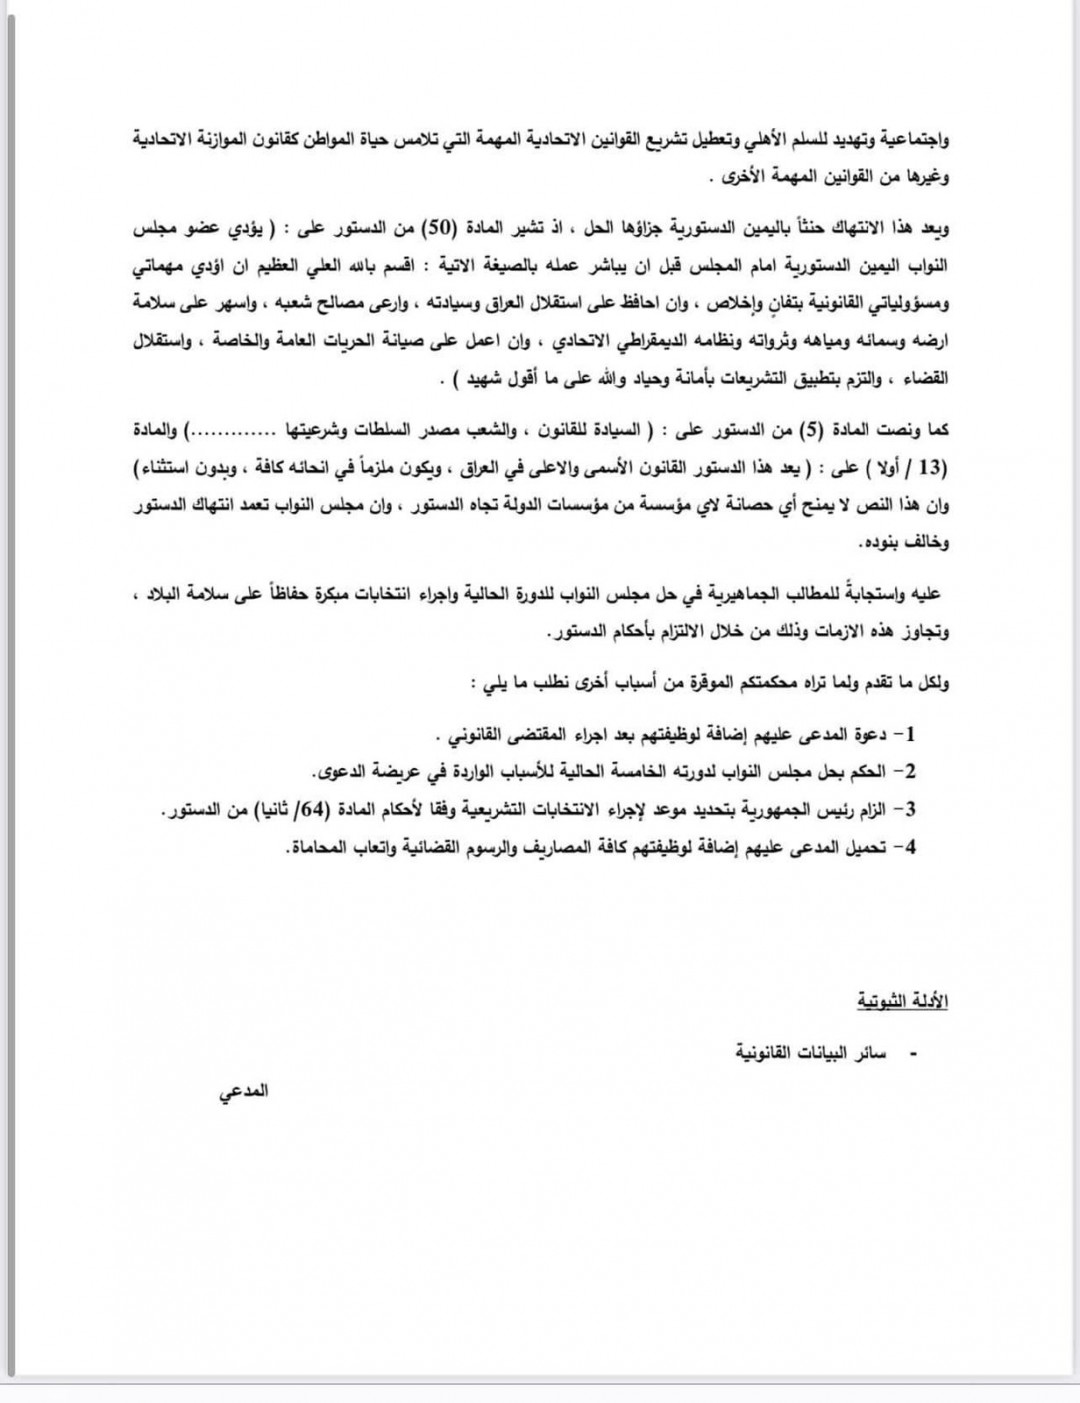 "Al-Sadr's Minister" directs his supporters to file a lawsuit against Saleh, Al-Kazemi and Al-Halbousi to dissolve Parliament